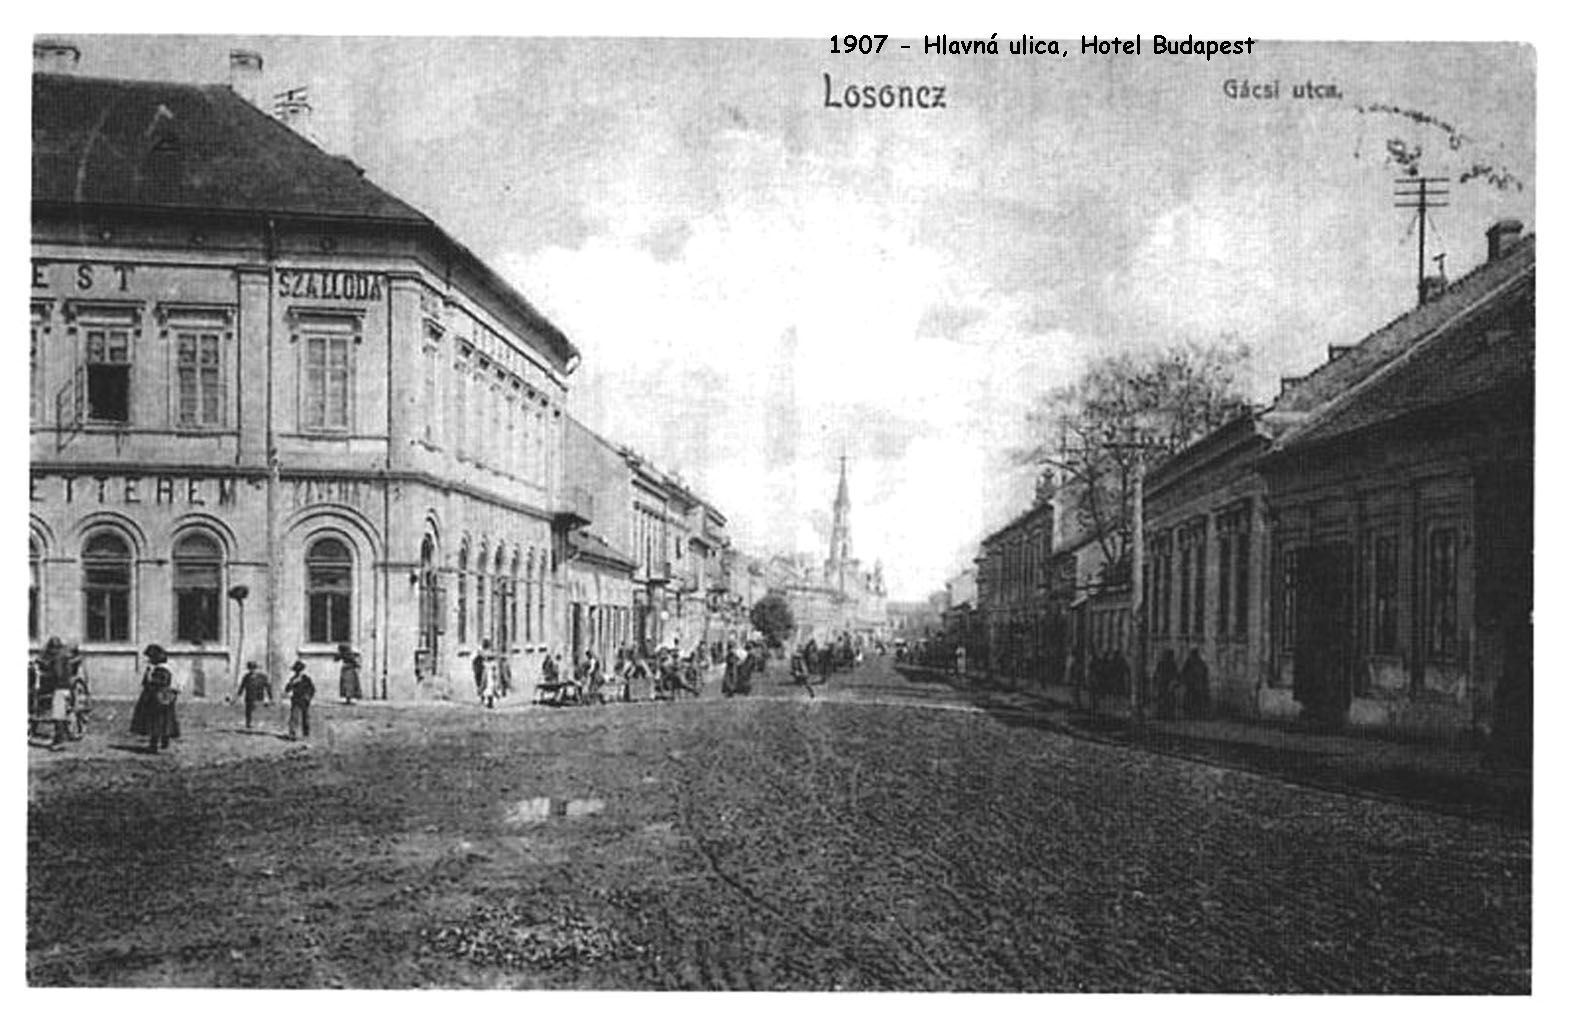 1907 - Hotel Budapest